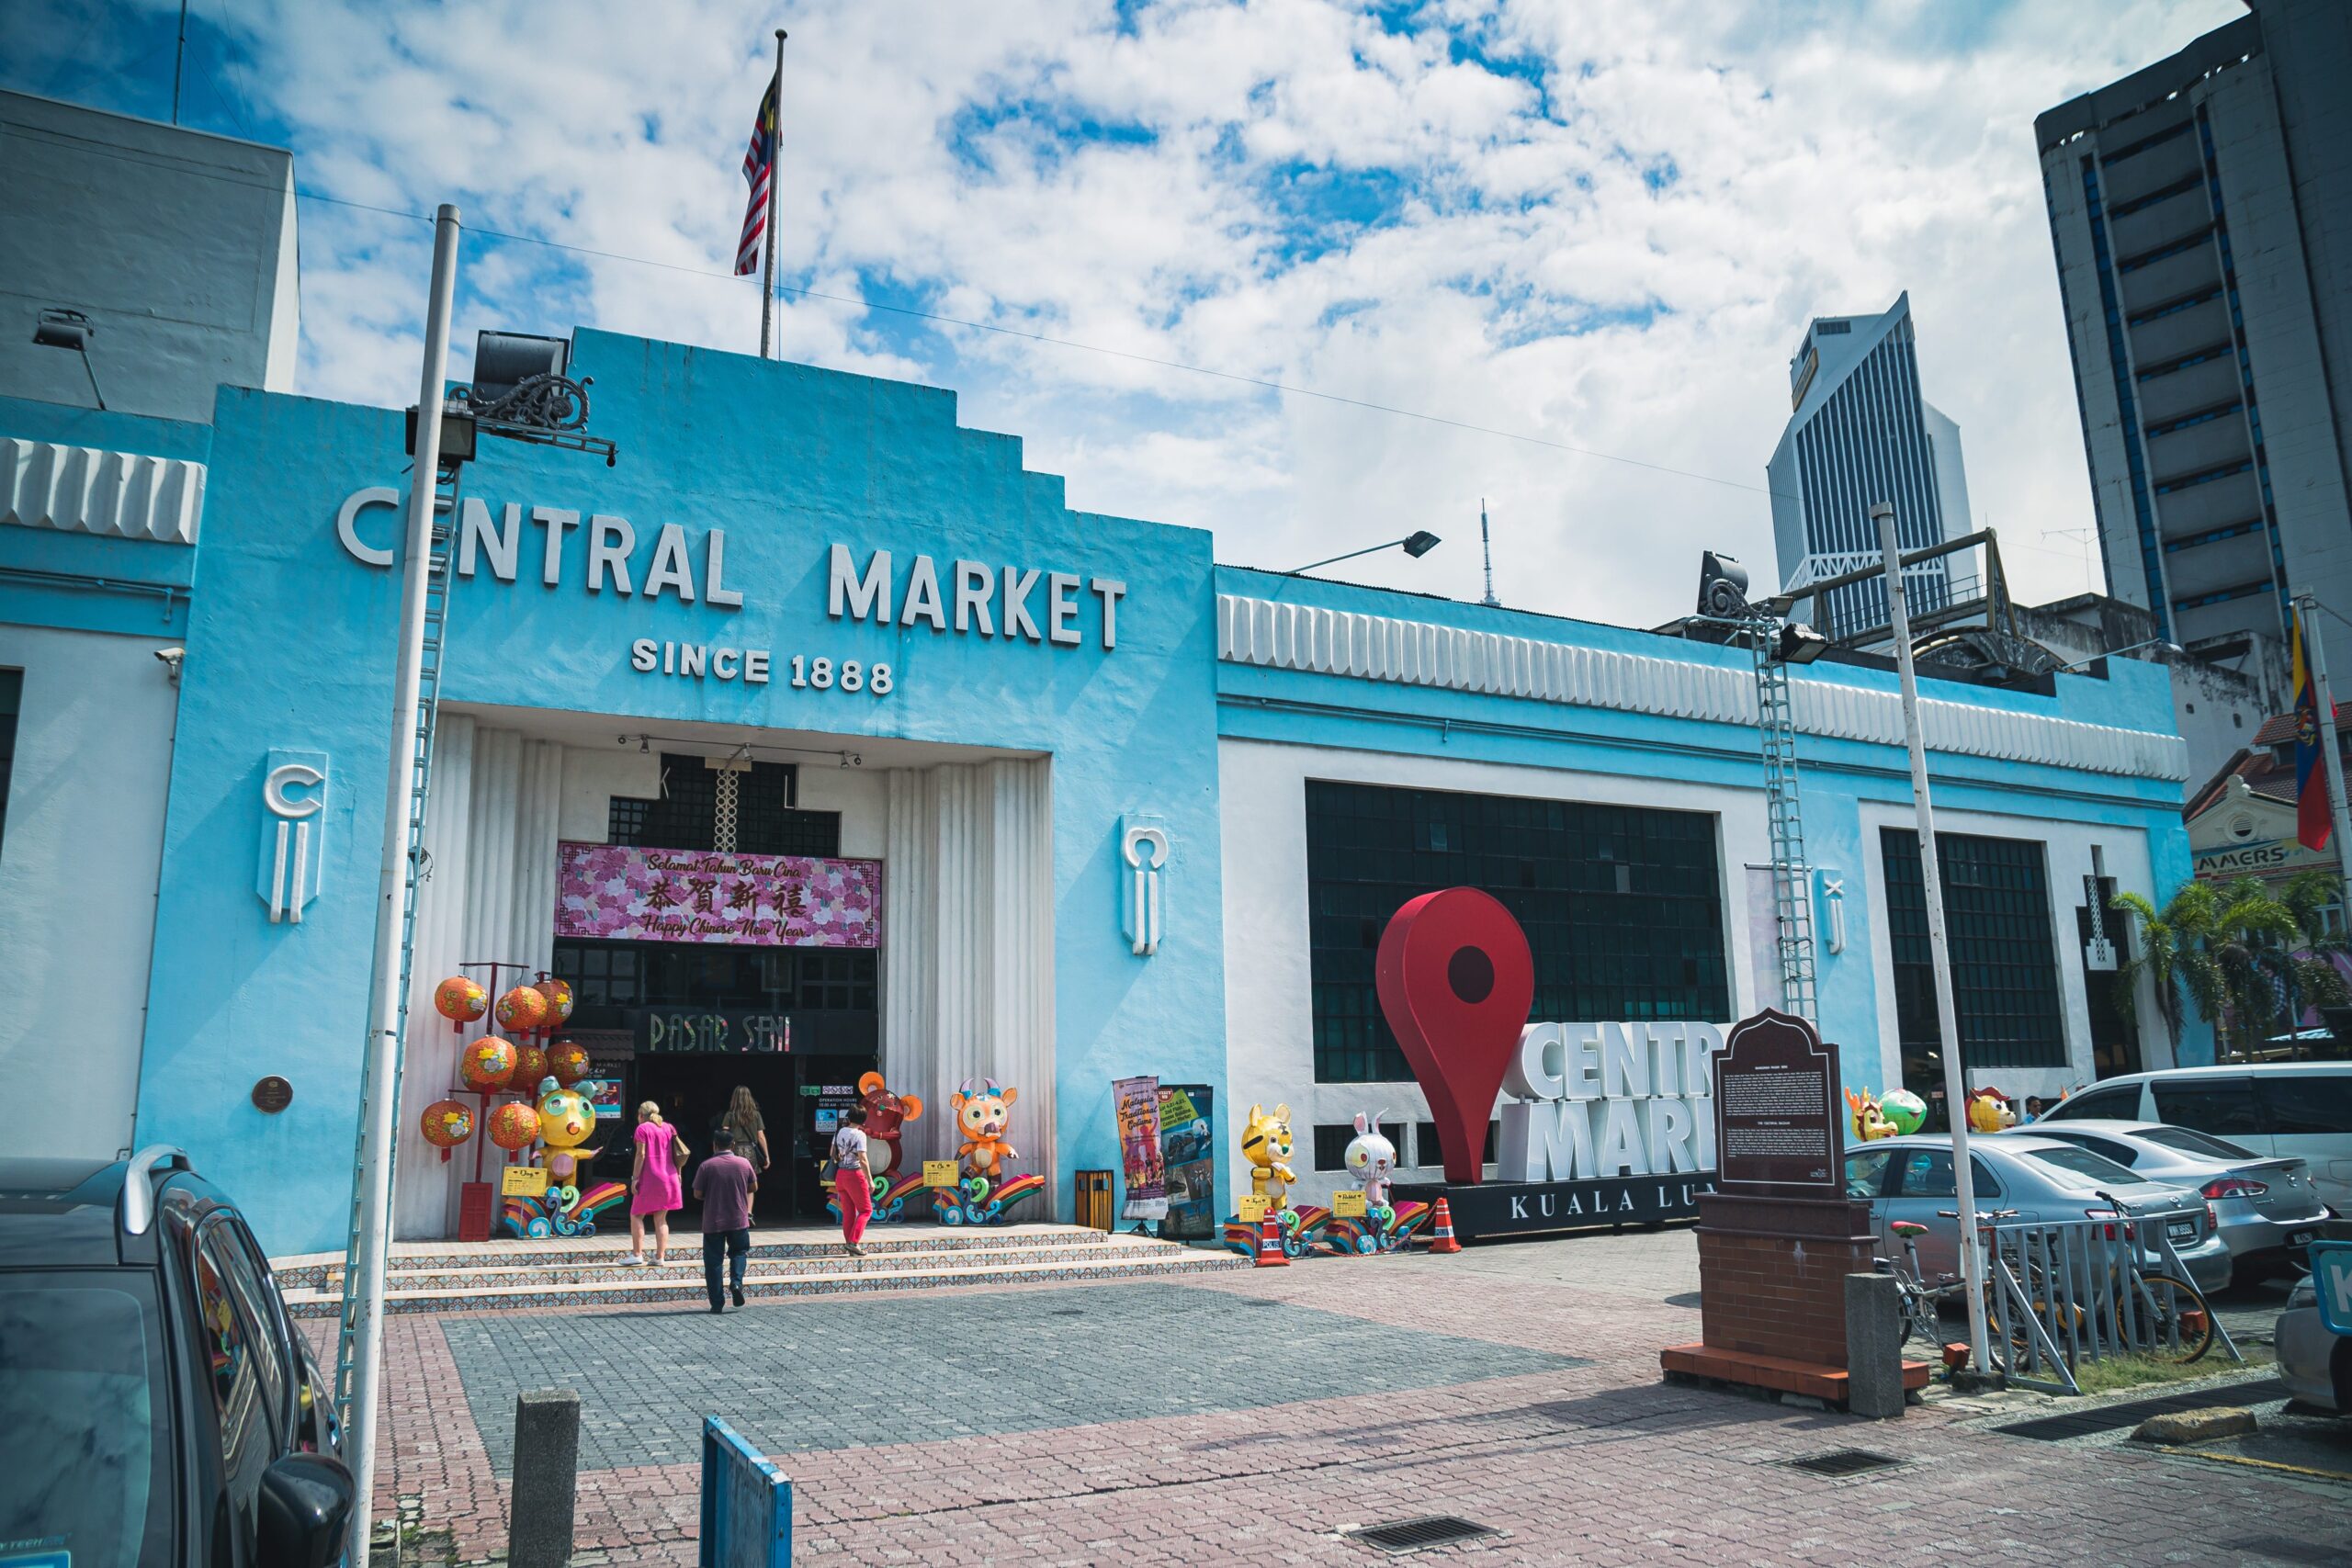 Central Market, Kuala Lumpur City Centre, Kuala Lumpur, Federal Territory of Kuala Lumpur, Malaysia